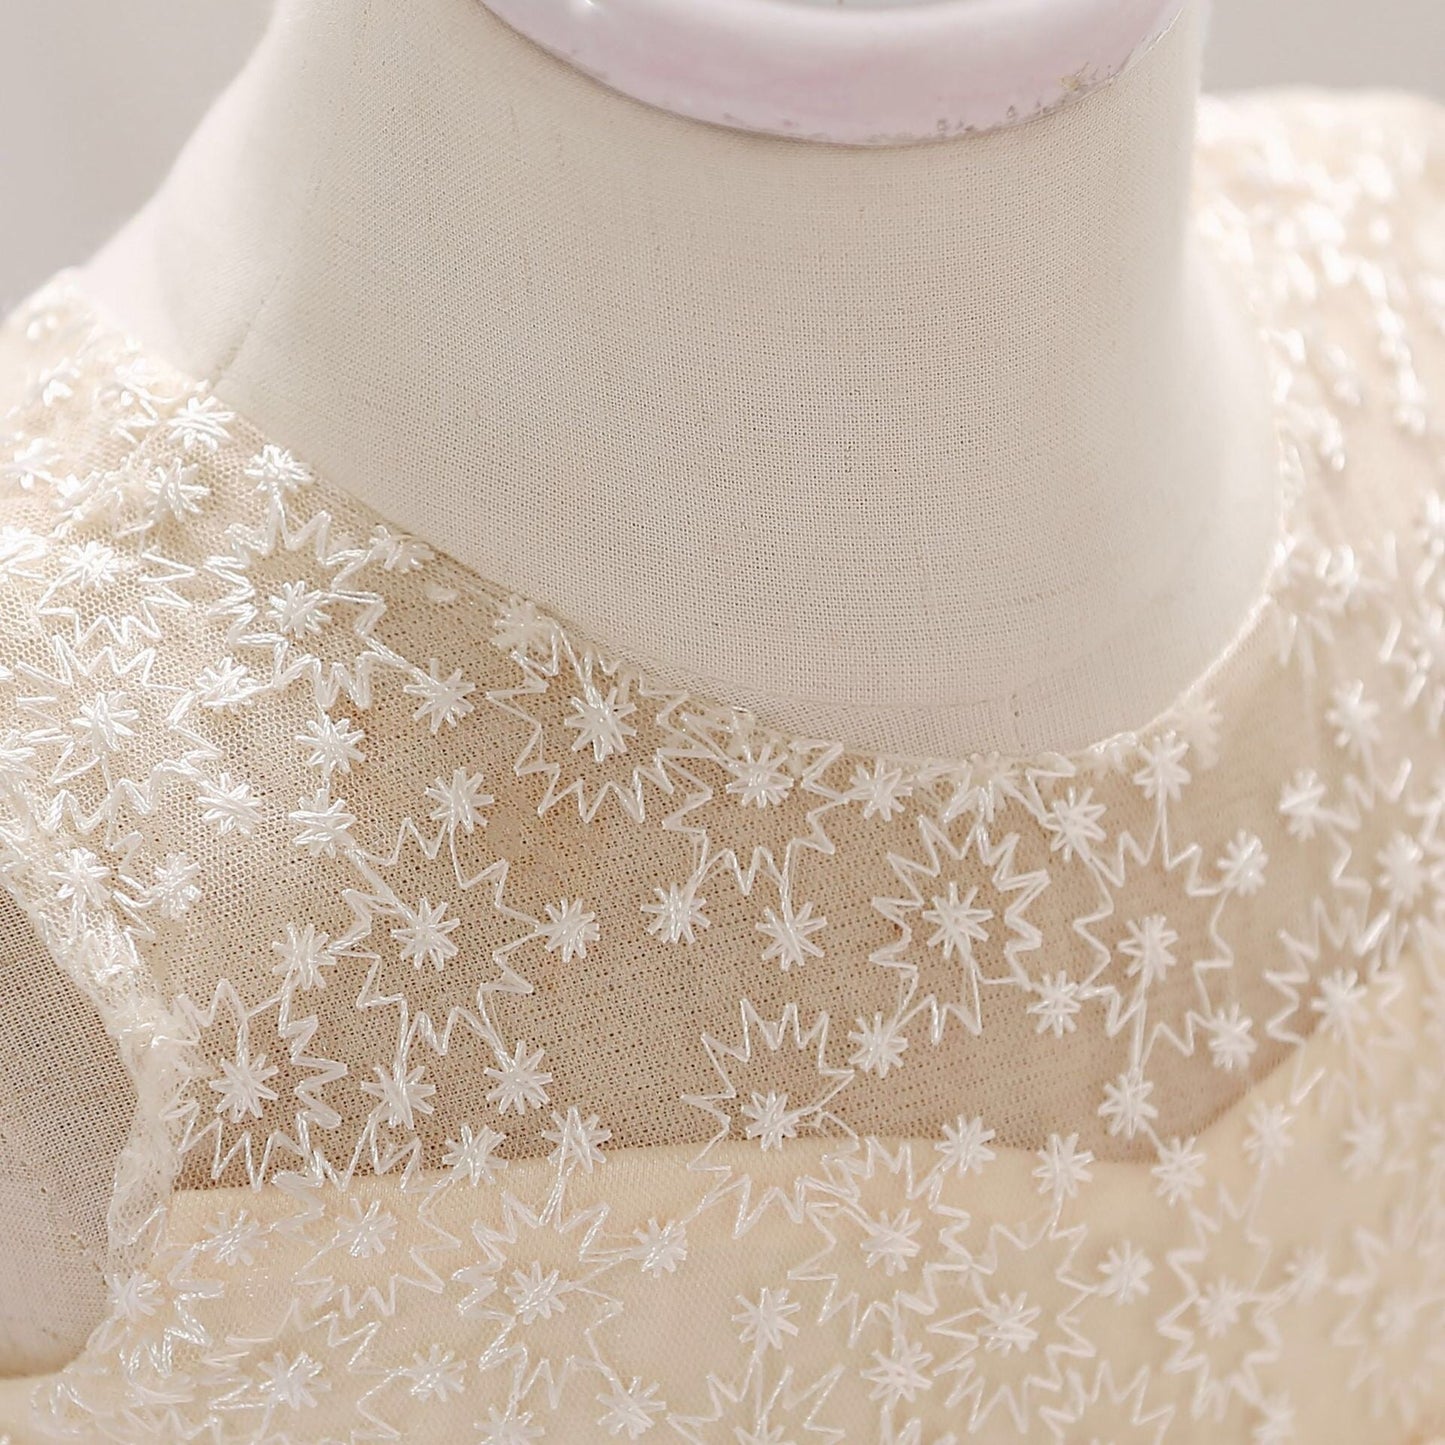 Baby Girl Floral Mesh Overlay Lace Design Sleeveless Christening Formal Dress Birthday Dress My Kids-USA